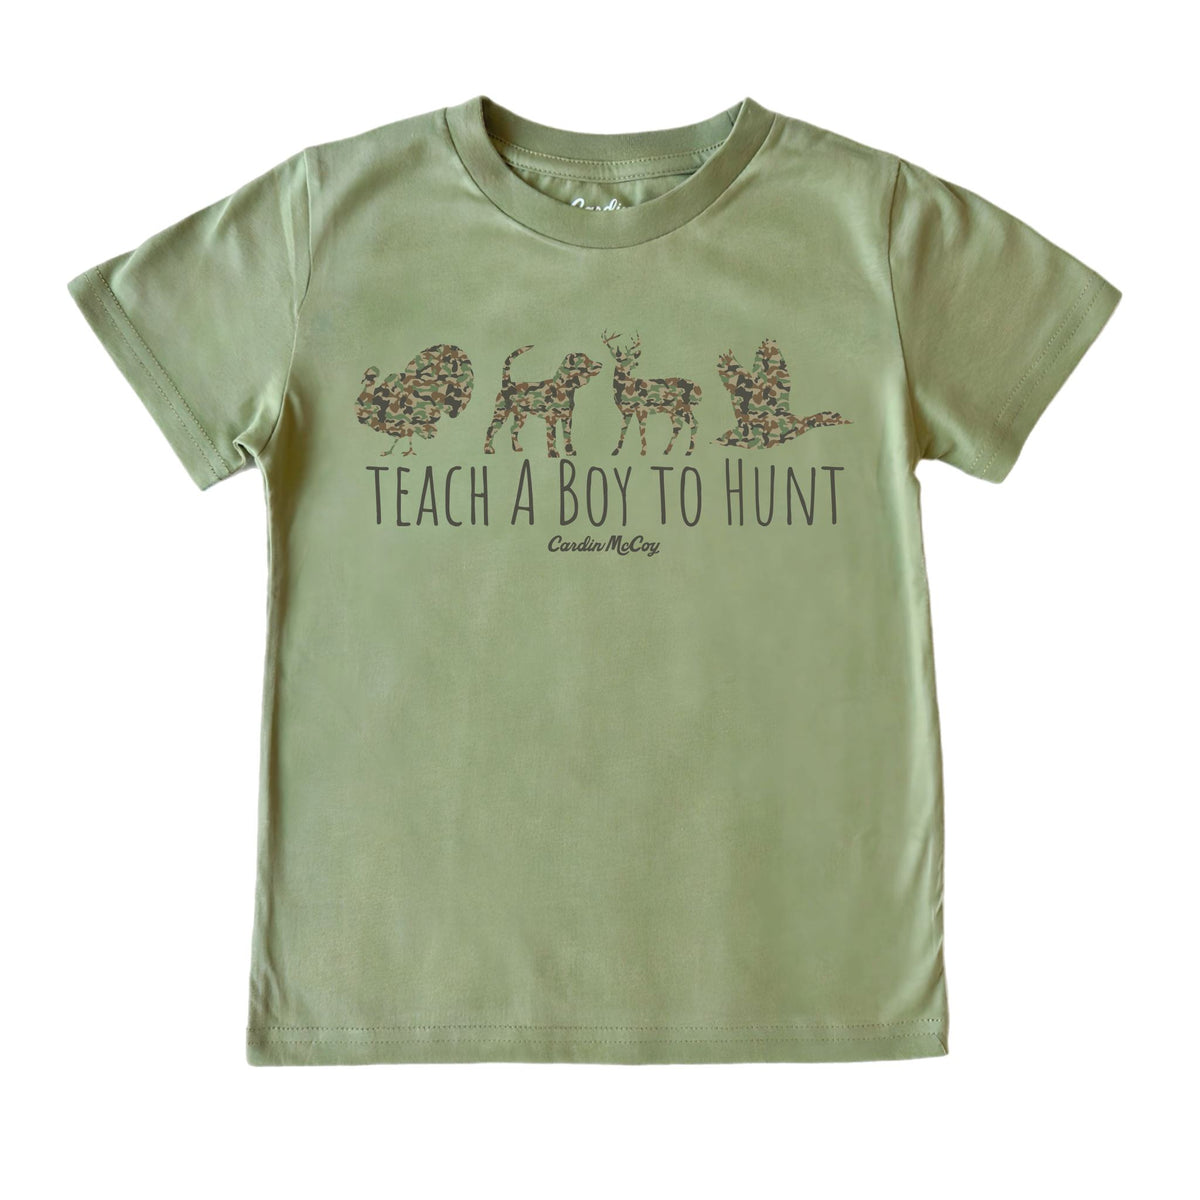 Boys' Front Teach a Boy to Hunt Short-Sleeve Tee Short Sleeve T-Shirt Cardin McCoy Light Olive XXS (2/3) No Pocket